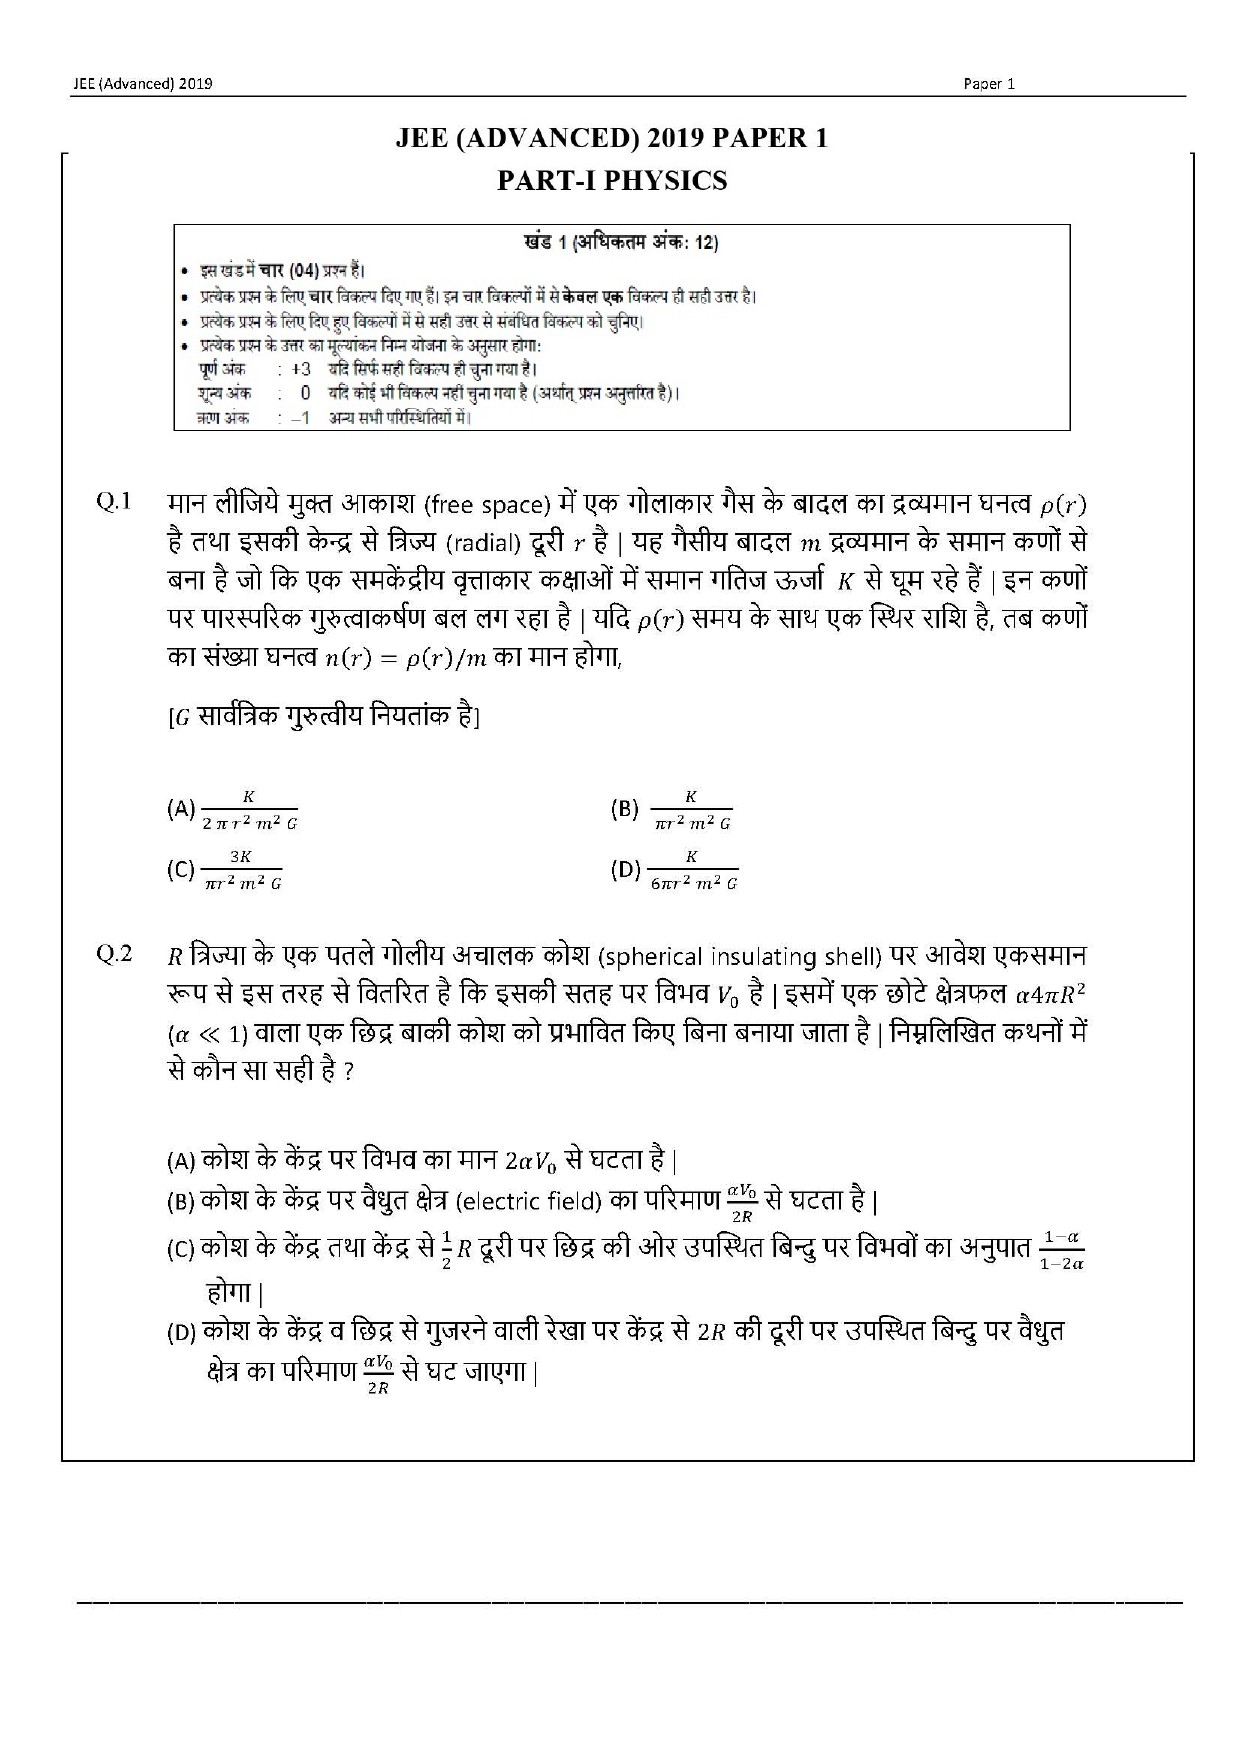 JEE Advanced Hindi Question Paper 2019 Paper 1 Physics 1